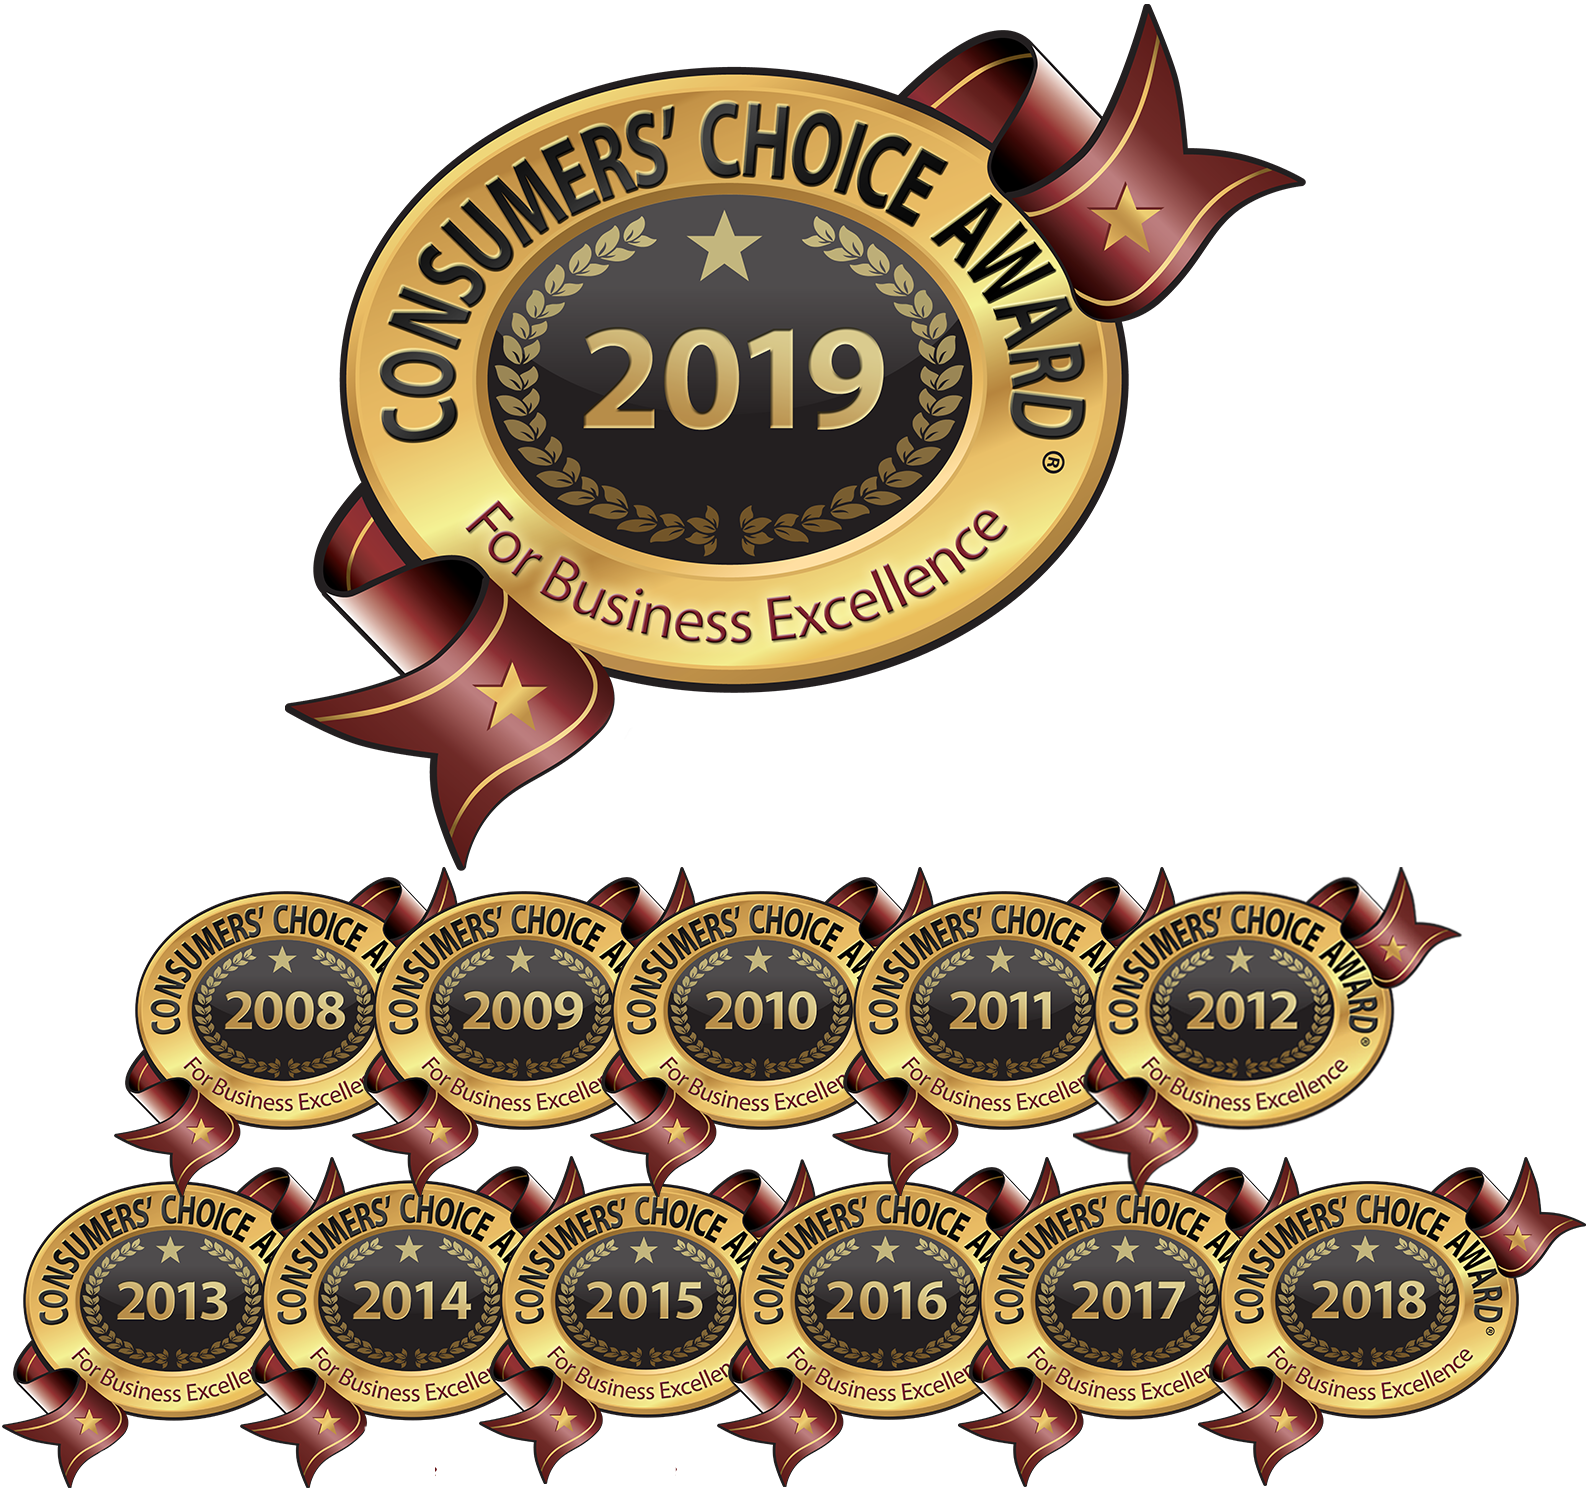 2008-2019 Consumers' Choice Award Winner